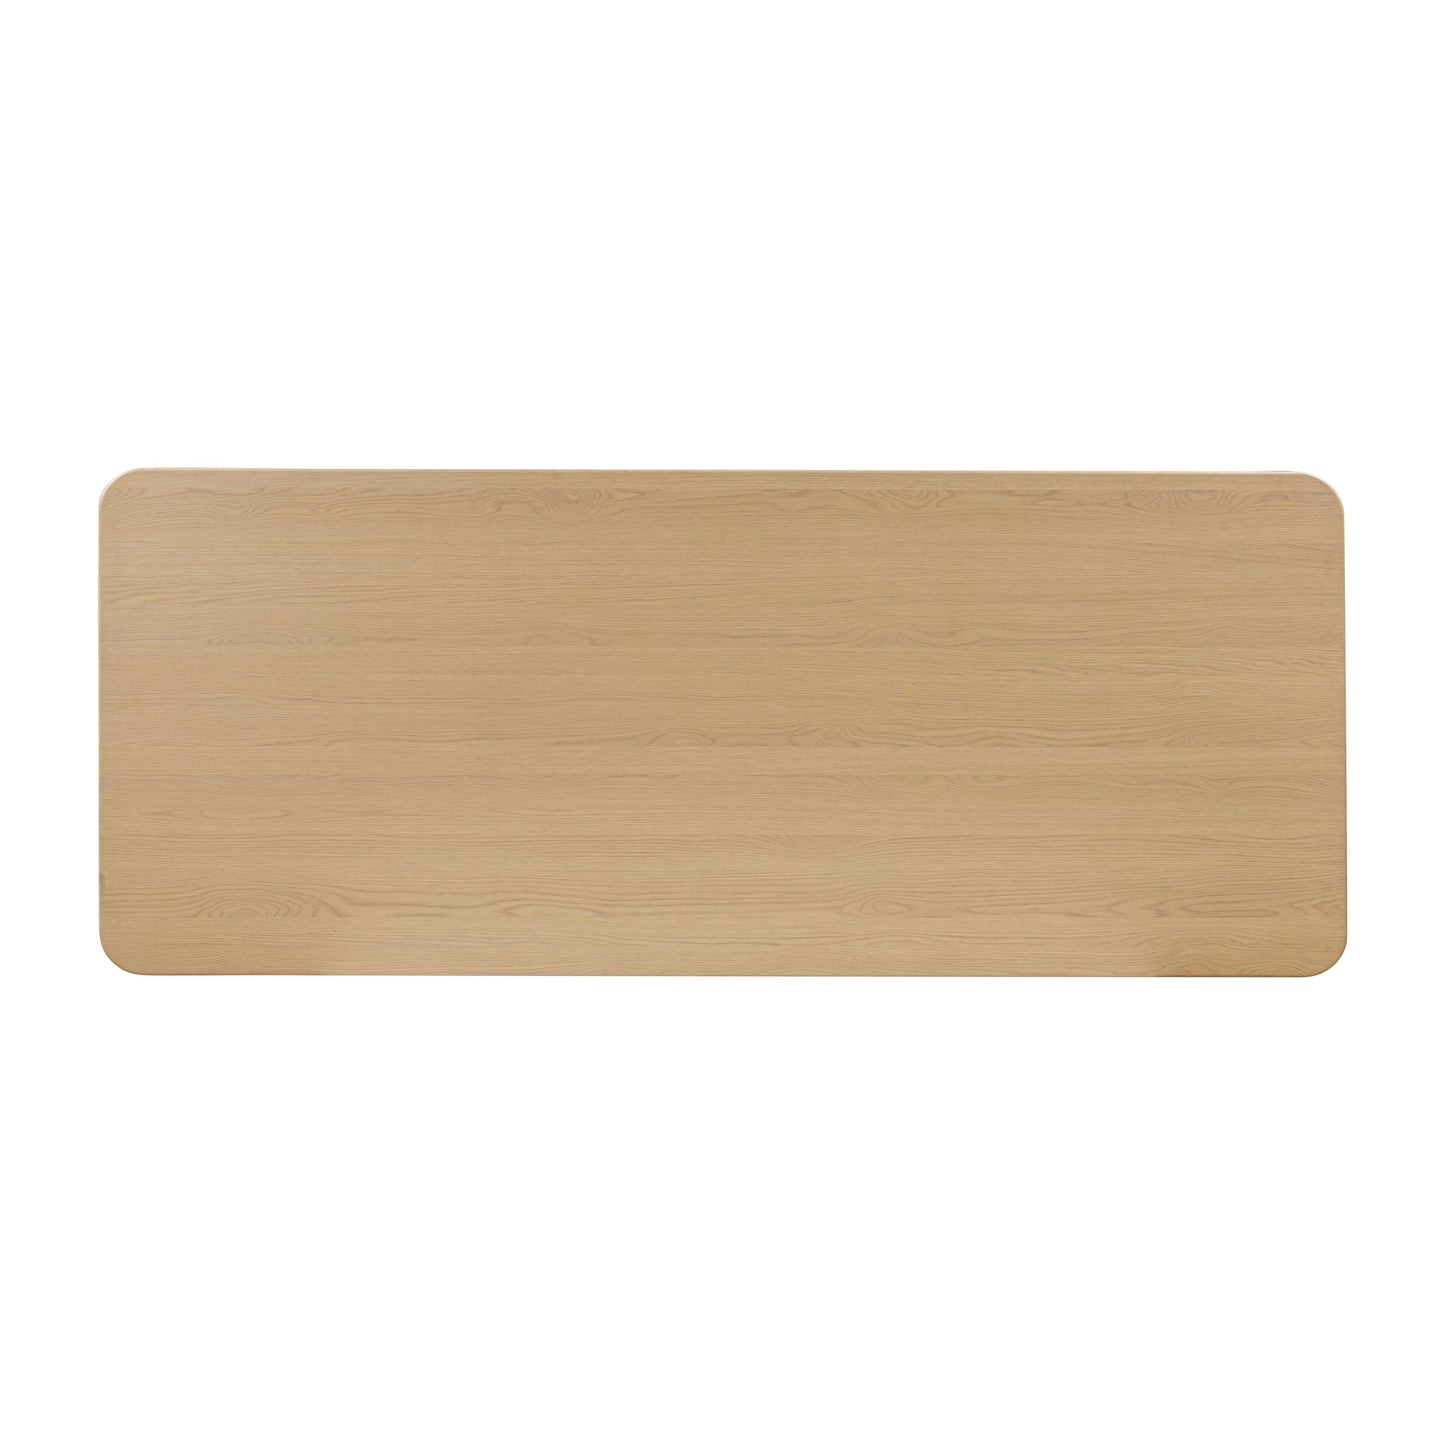 selena natural oak rectangular dining table